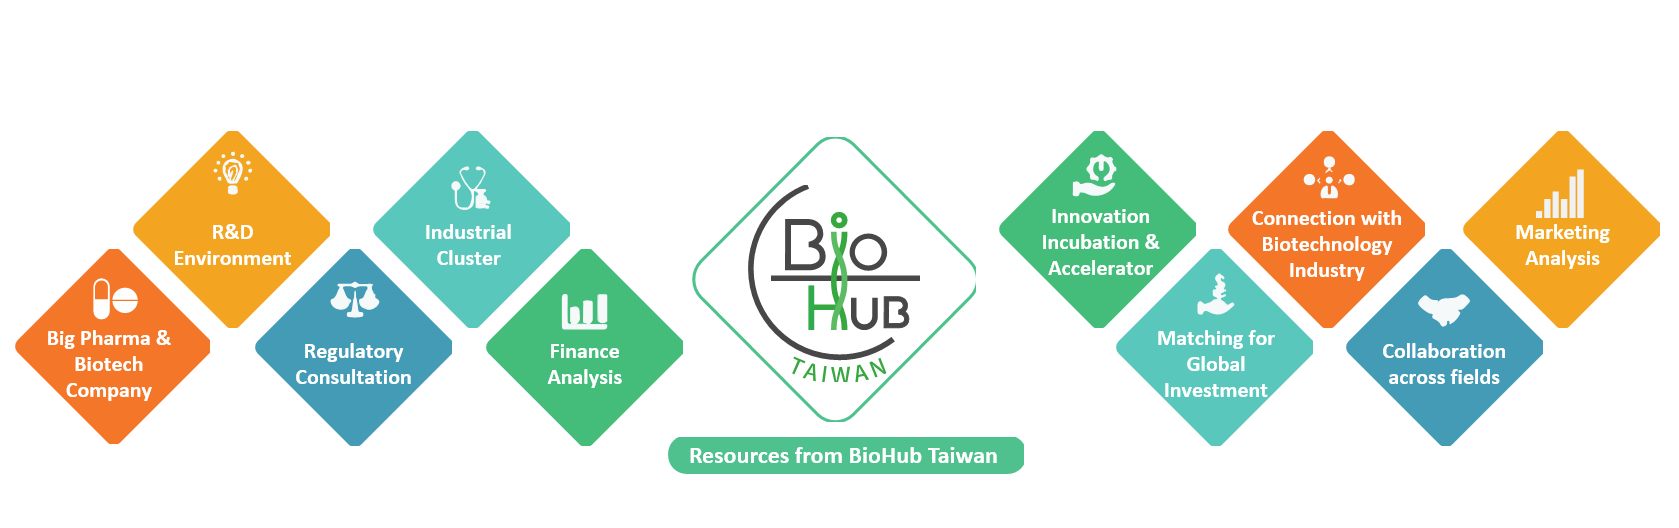 BioHub一條龍服務